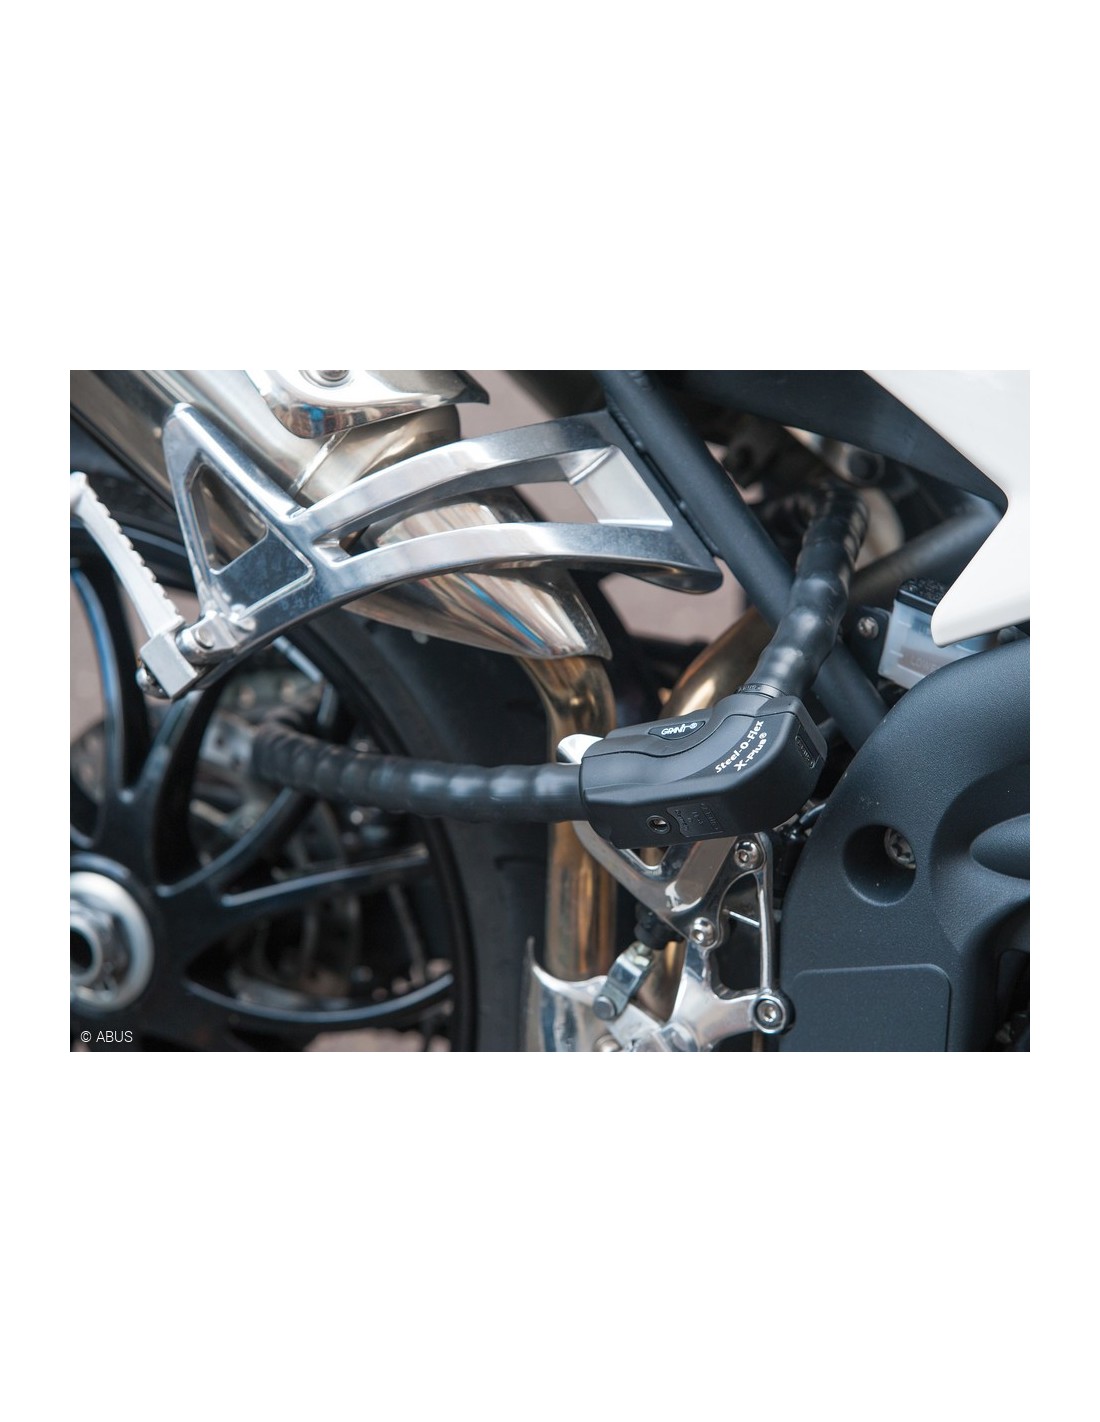 Cache serrure de contact gris granit R nineT - BMW Motorrad